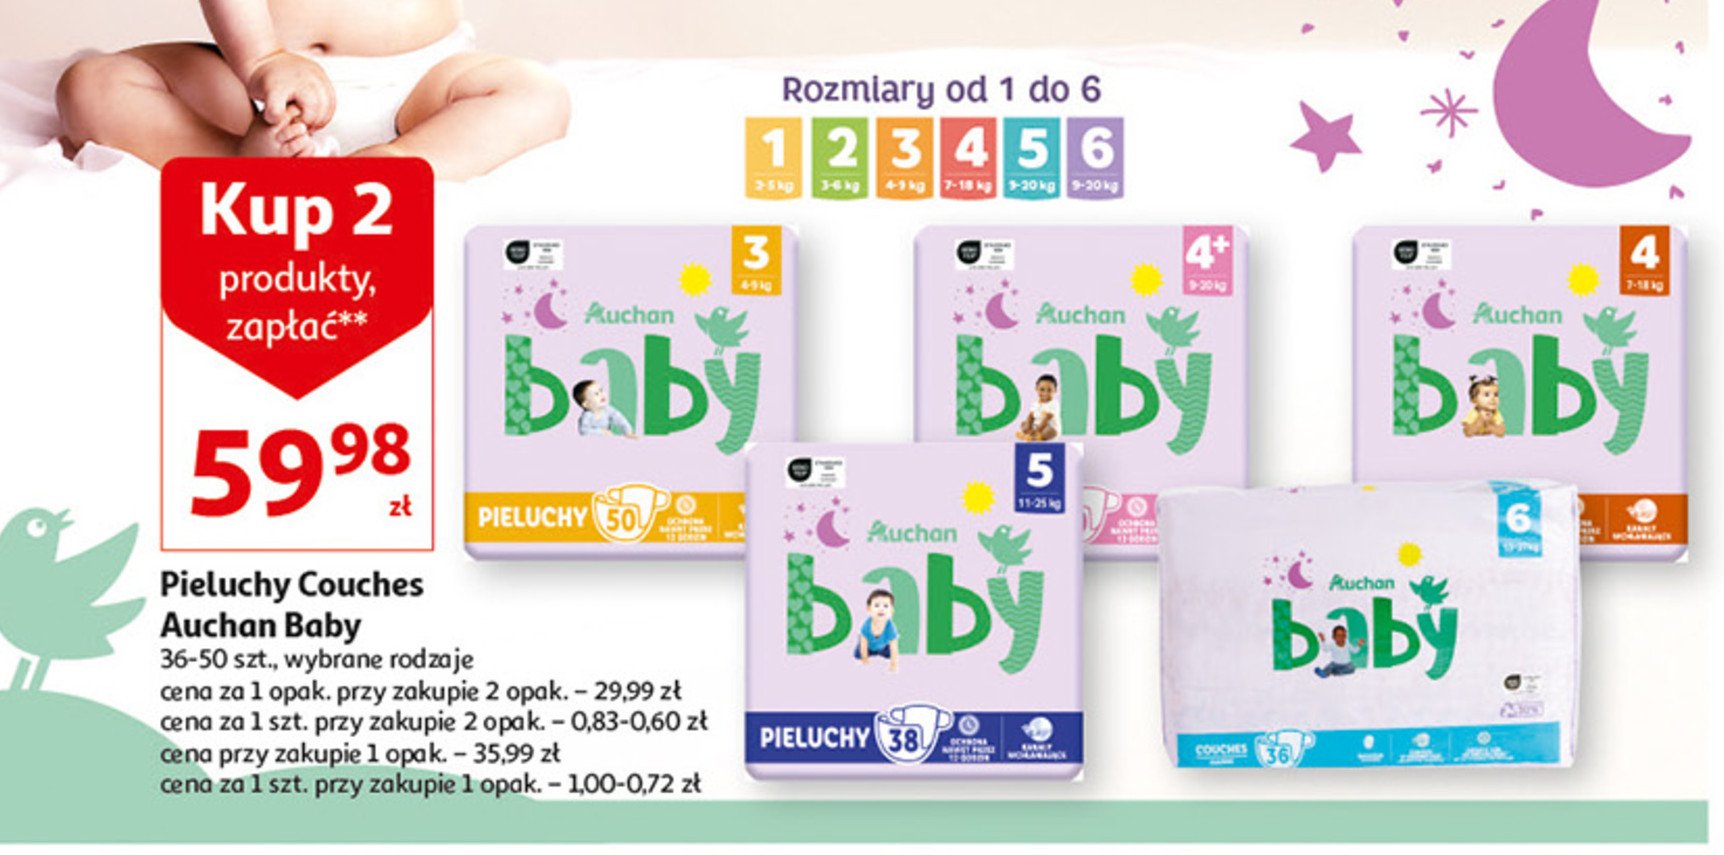 Pieluchy 5 Auchan baby promocja